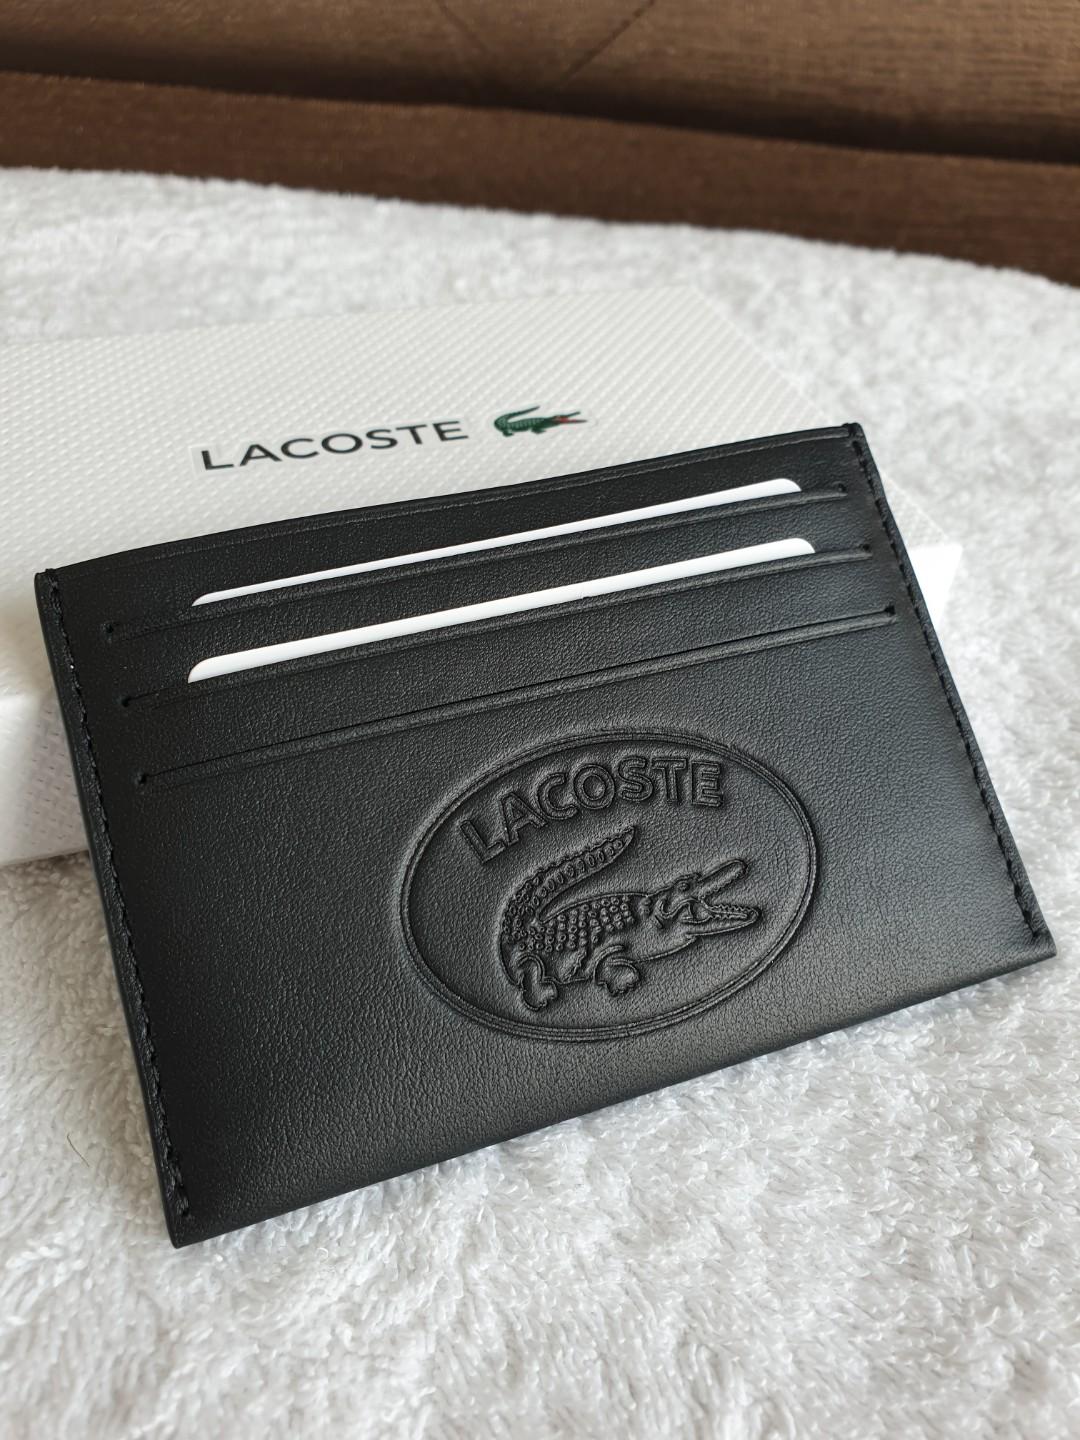 lacoste card holder wallet